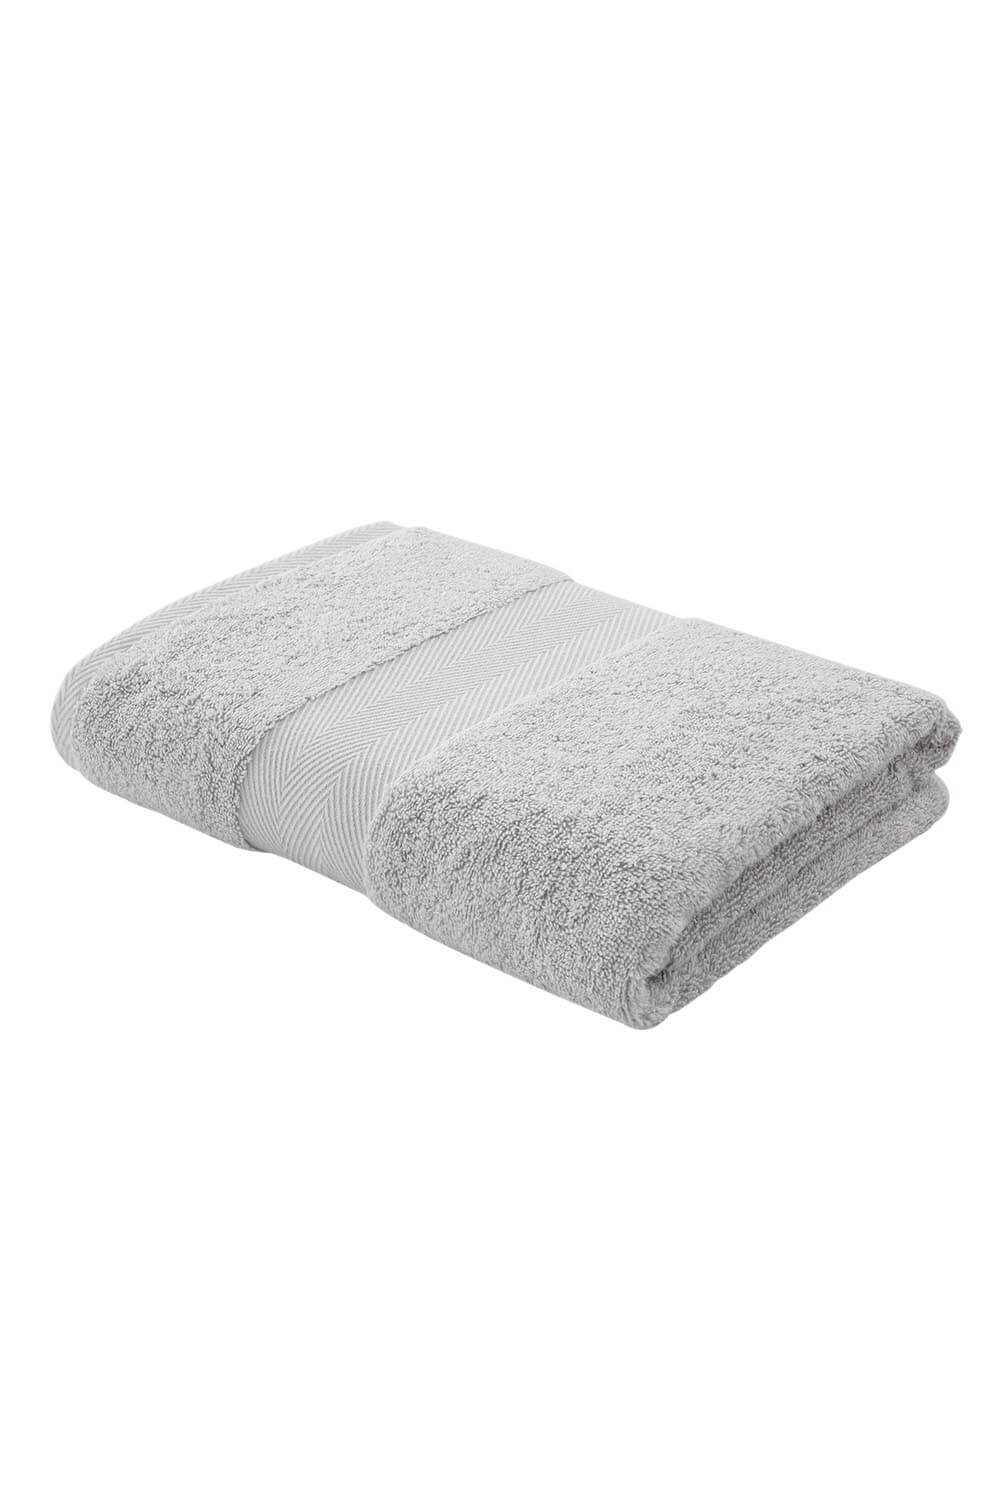 Bianca Silk Bath Towel 70cm x 127cm - Dove Grey 1 Shaws Department Stores